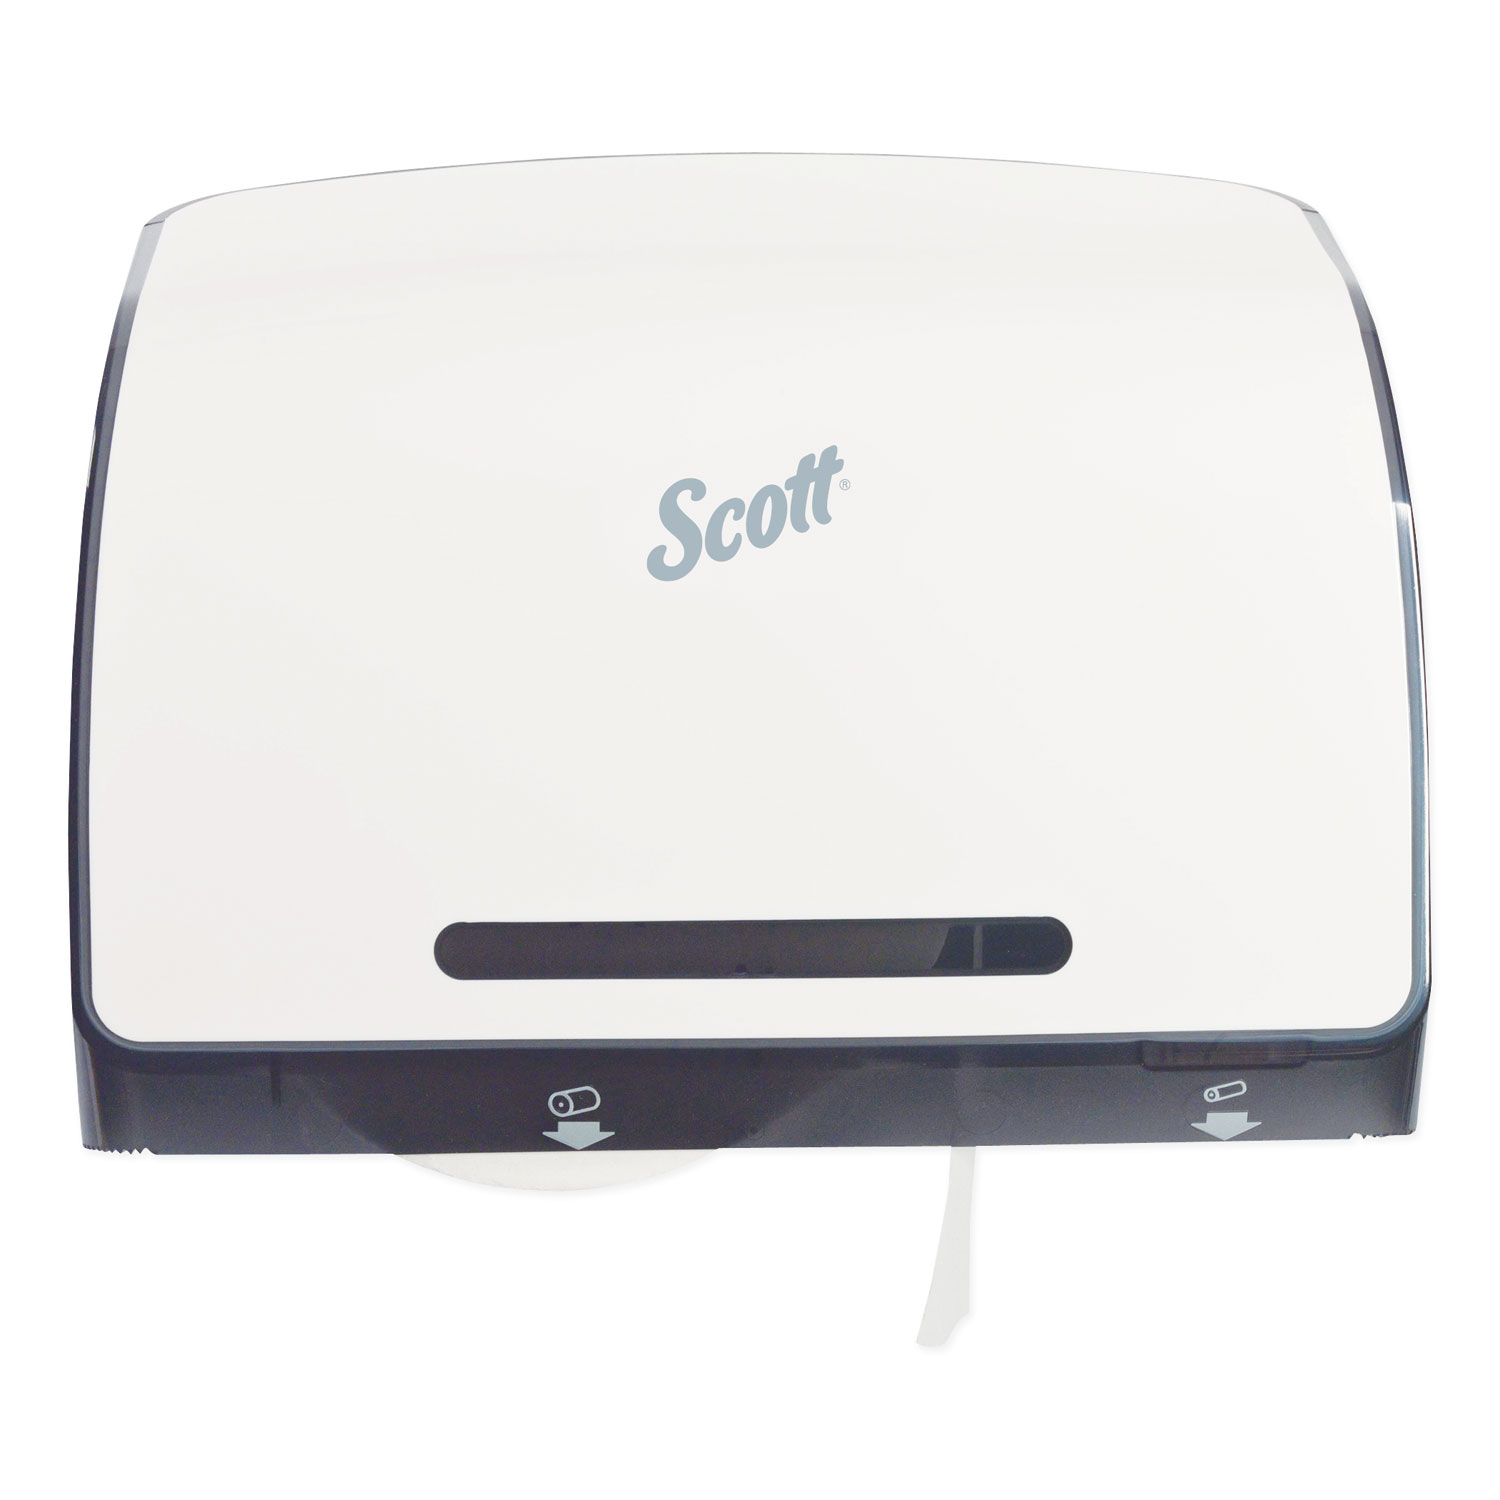  Scott 34832 Pro Coreless Jumbo Roll Tissue Dispenser, 14 1/10 x 5 4/5 x 10 2/5, White (KCC34832) 